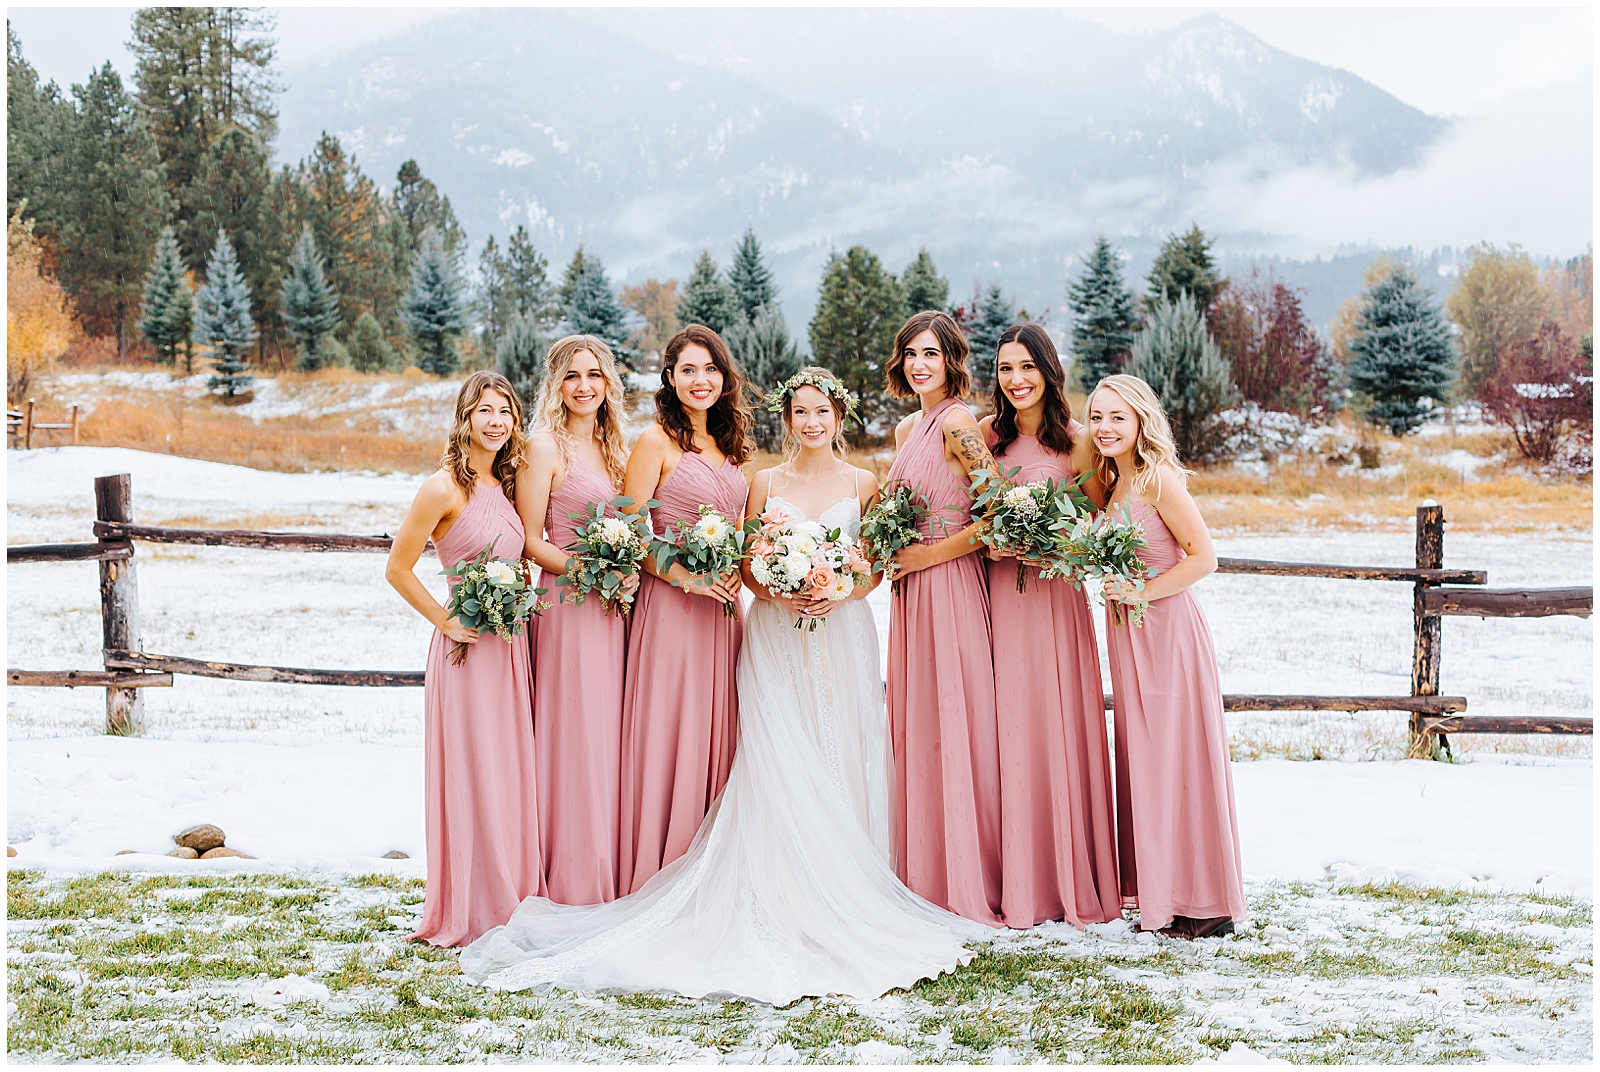 Dusty Rose Bridesmaids Dresses at Fall Rainy Sixty Chapel Mountain Wedding